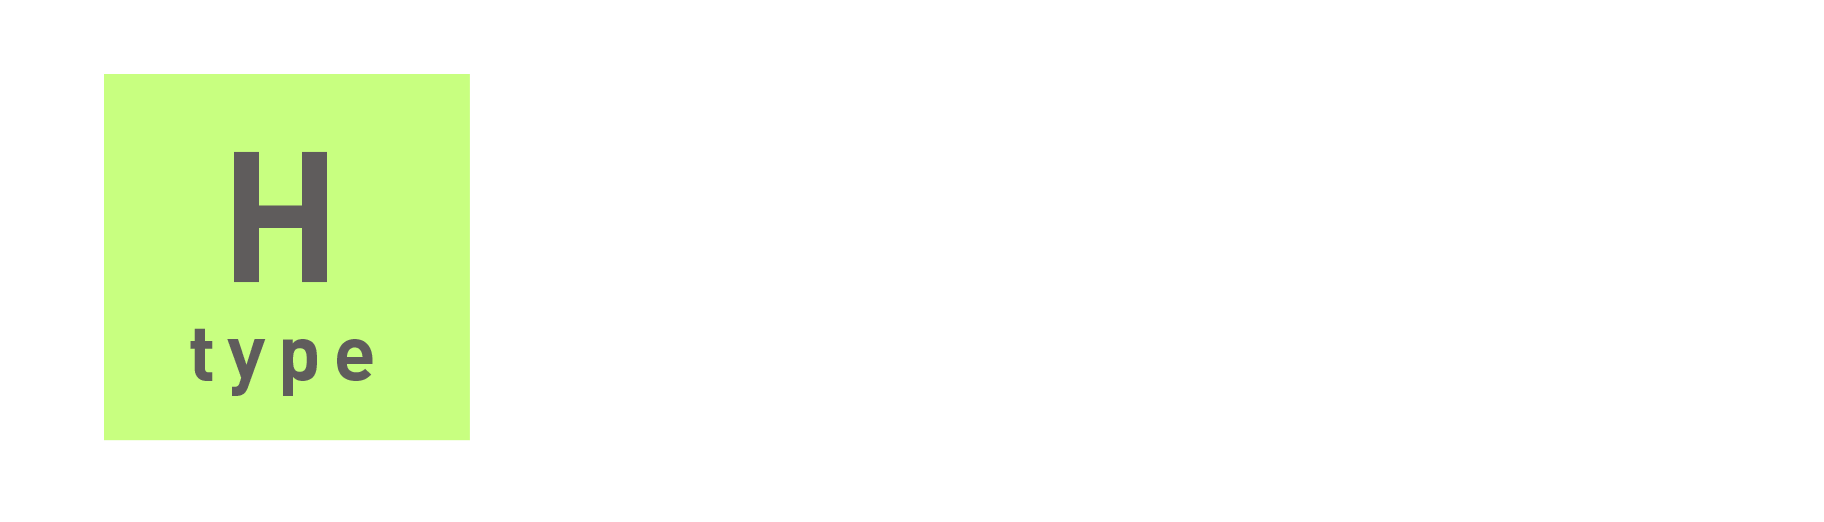 H-type｜2LDK+S+WIC 専有面積70.92㎡（約21.45坪）